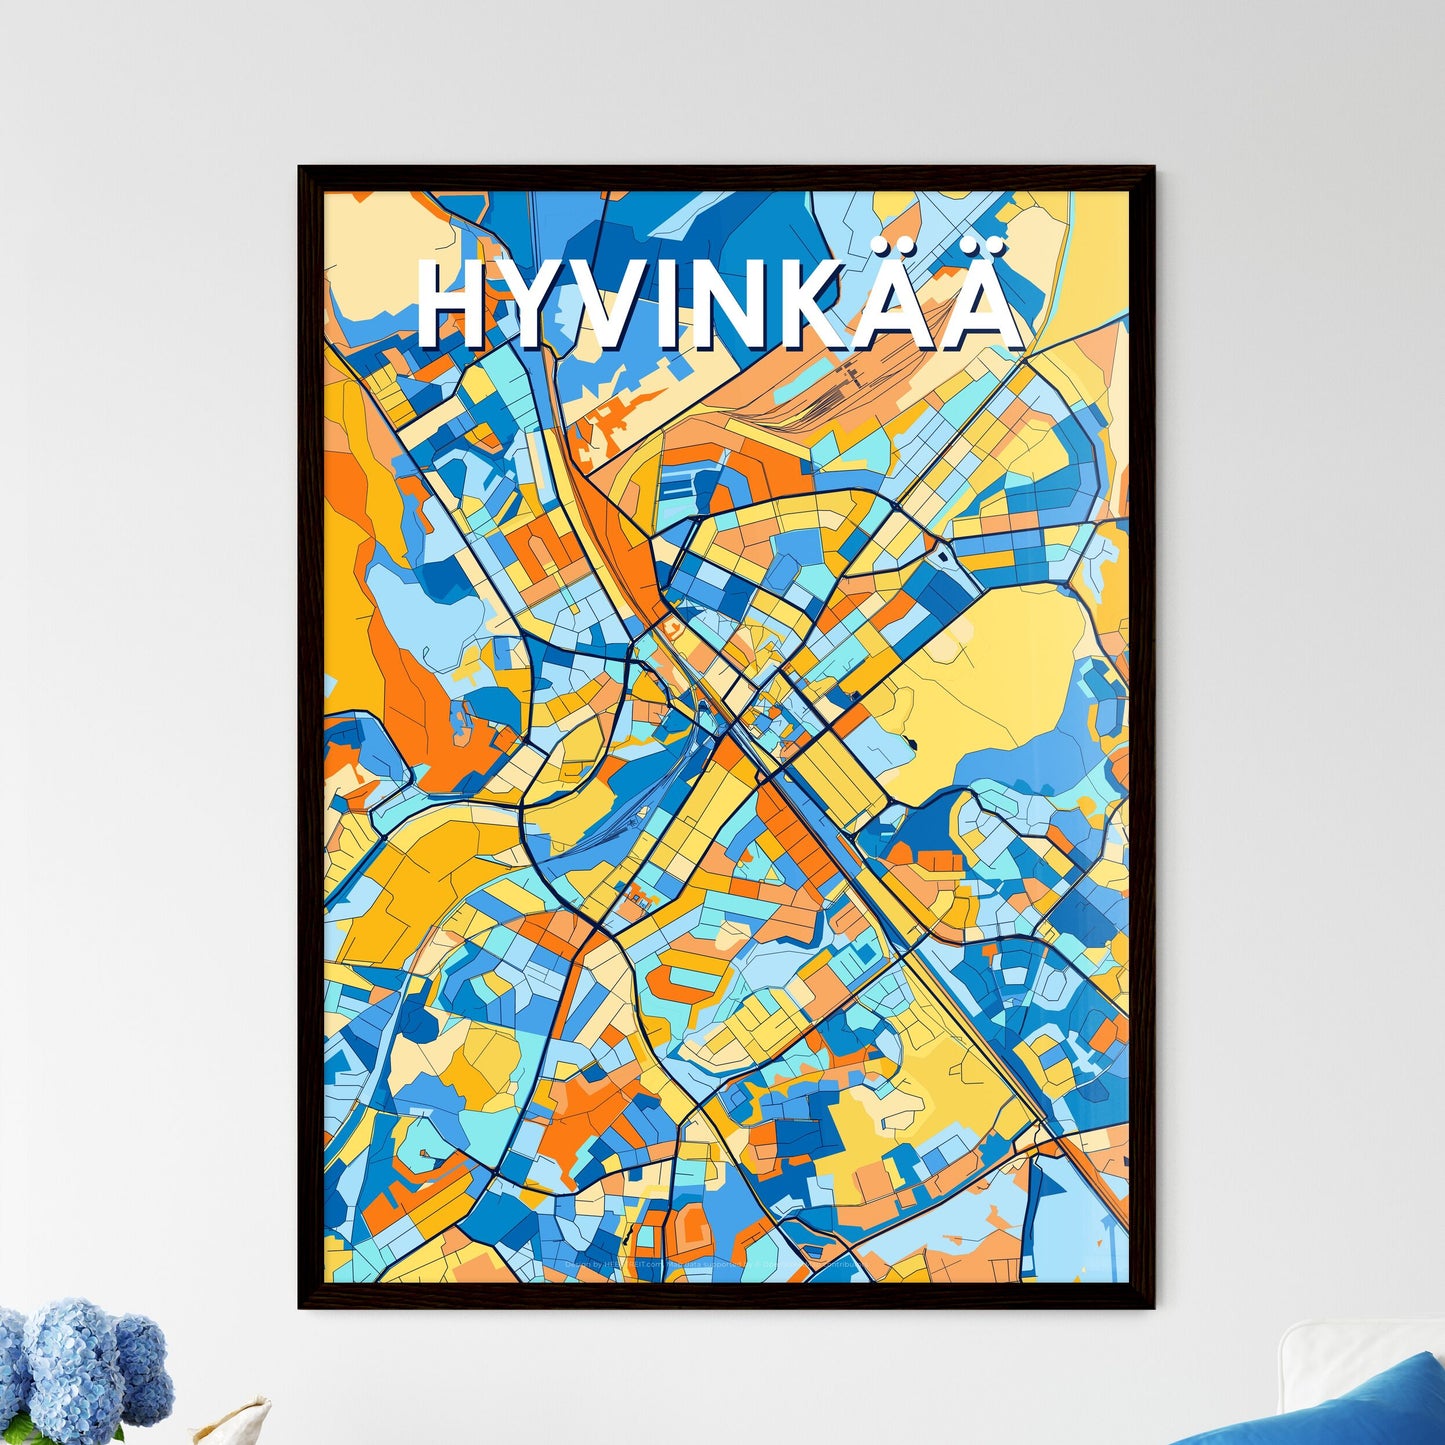 HYVINKÄÄ FINLAND Vibrant Colorful Art Map Poster Blue Orange